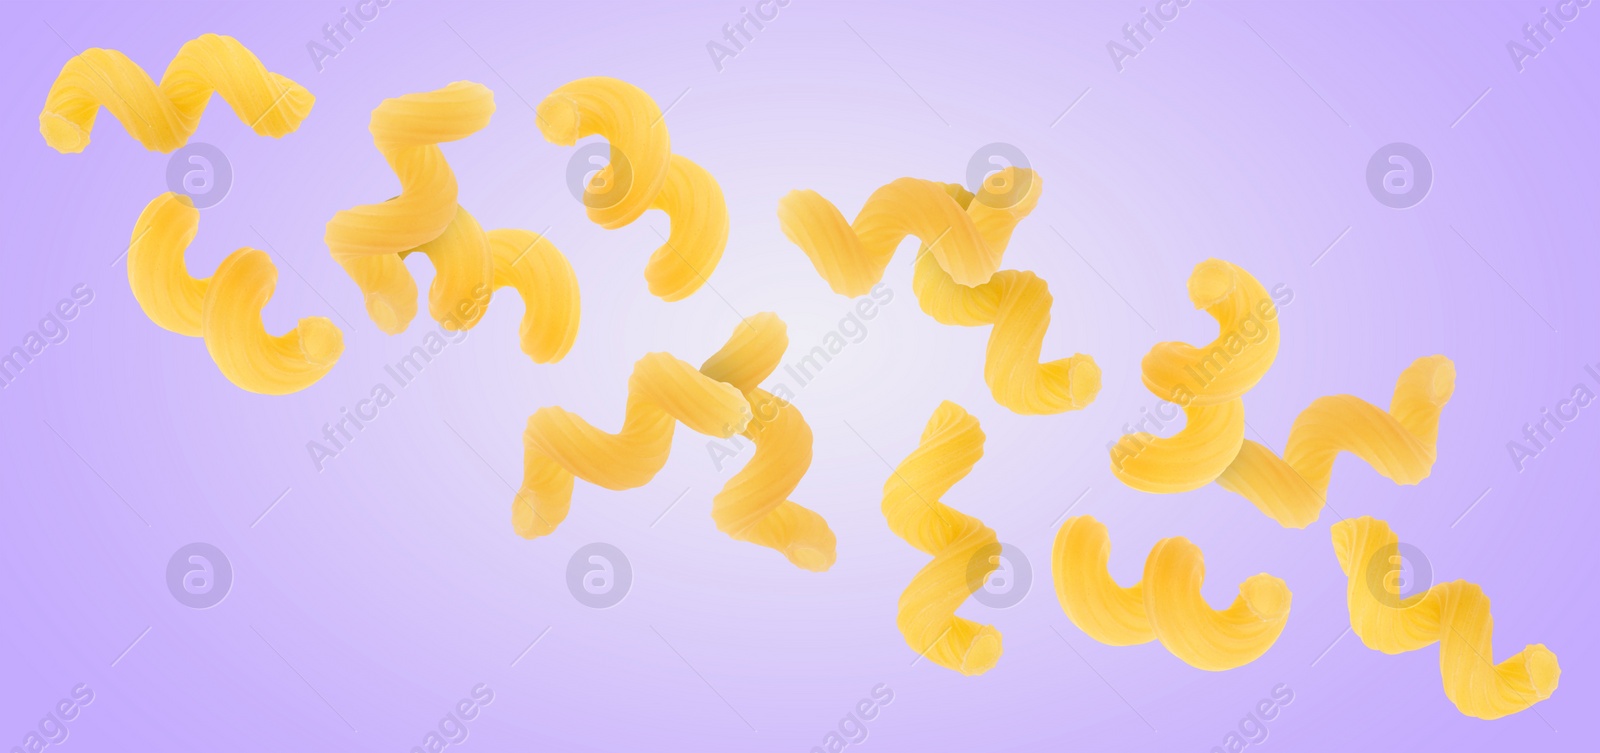 Image of Raw cavatappi pasta falling on violet background